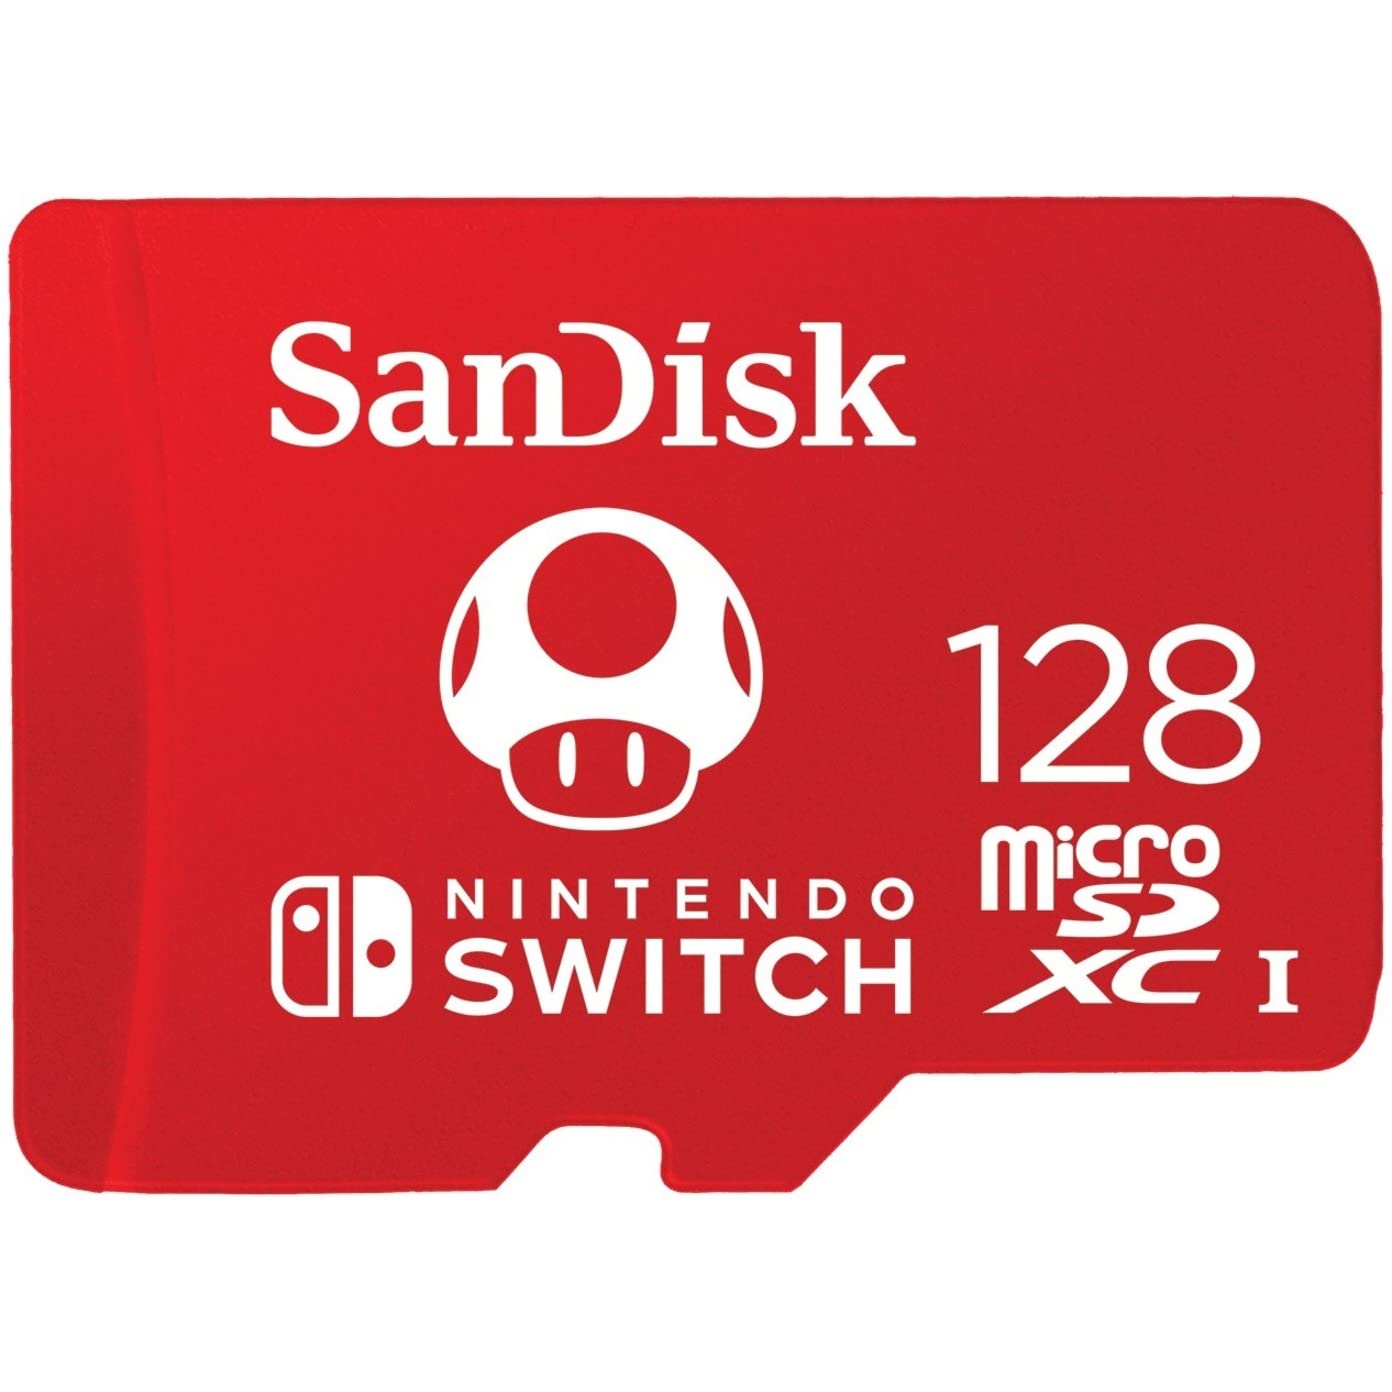 Microsdxc Uhs I Card Nintendo Sandisk Sdsqxao 128g Gnczn 619659171520